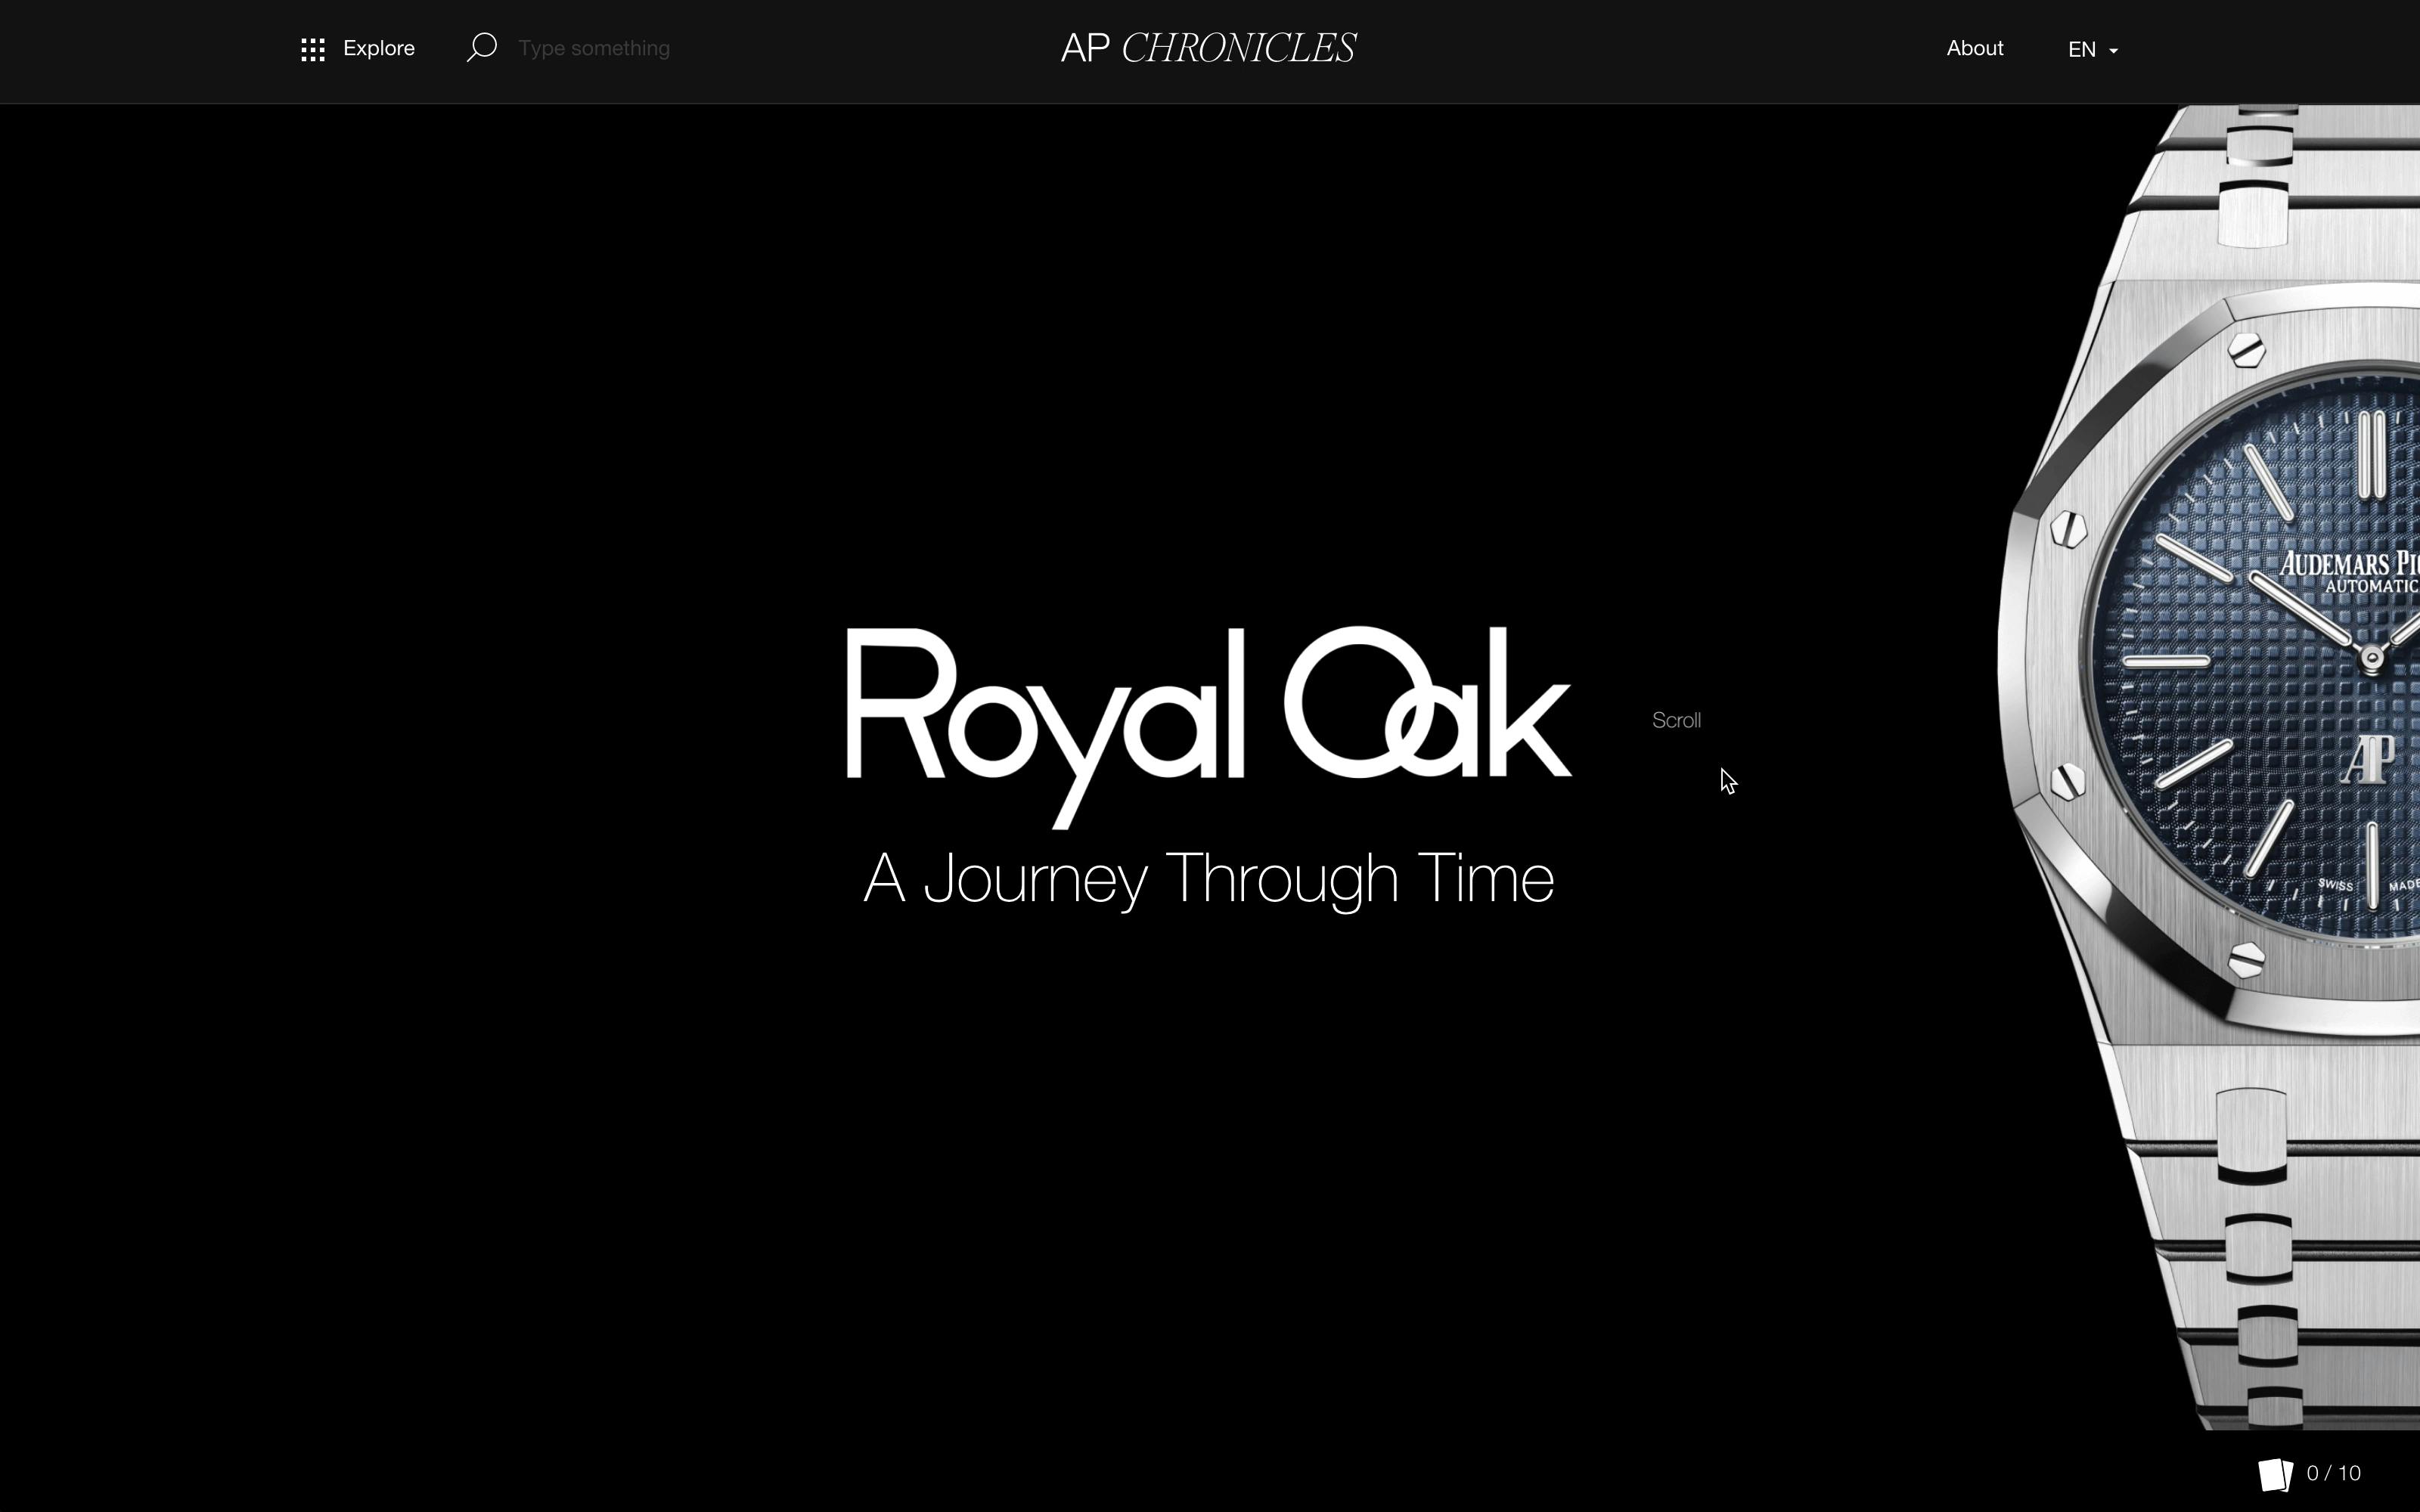 AP Chronicles: Dive into the Royal Oak's history